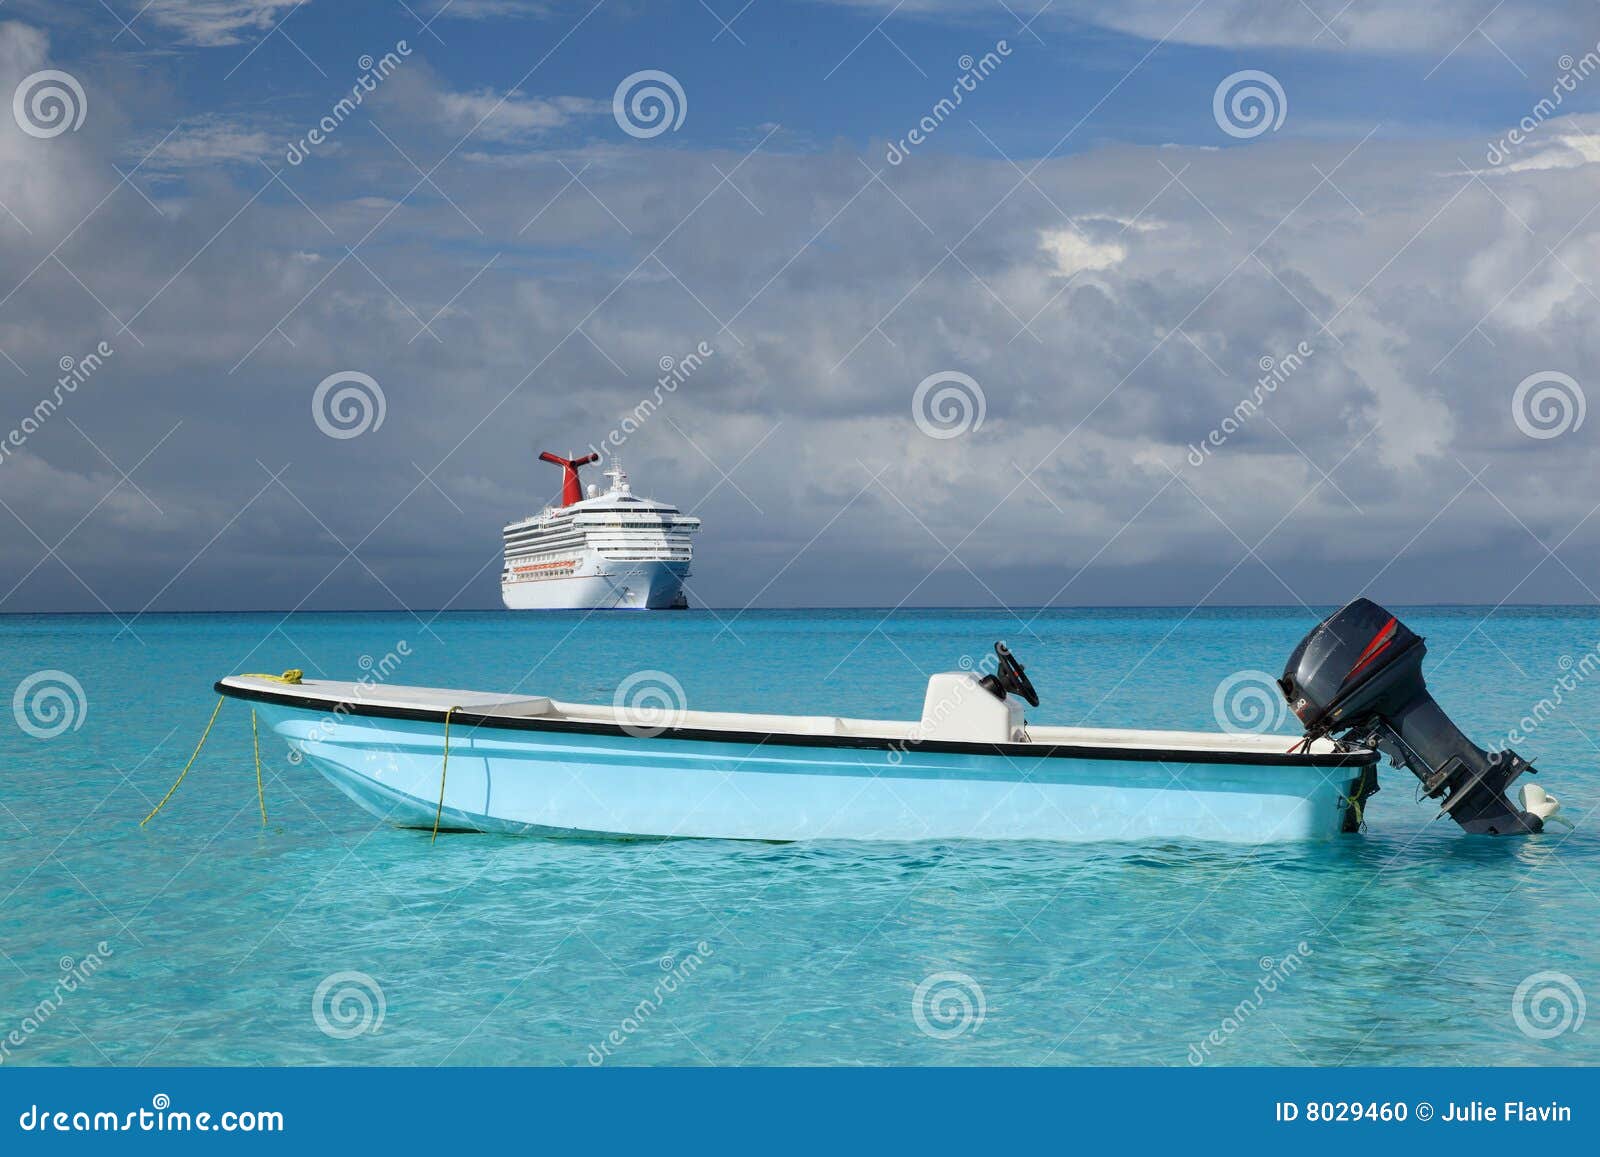 cruise ship and fishing boat